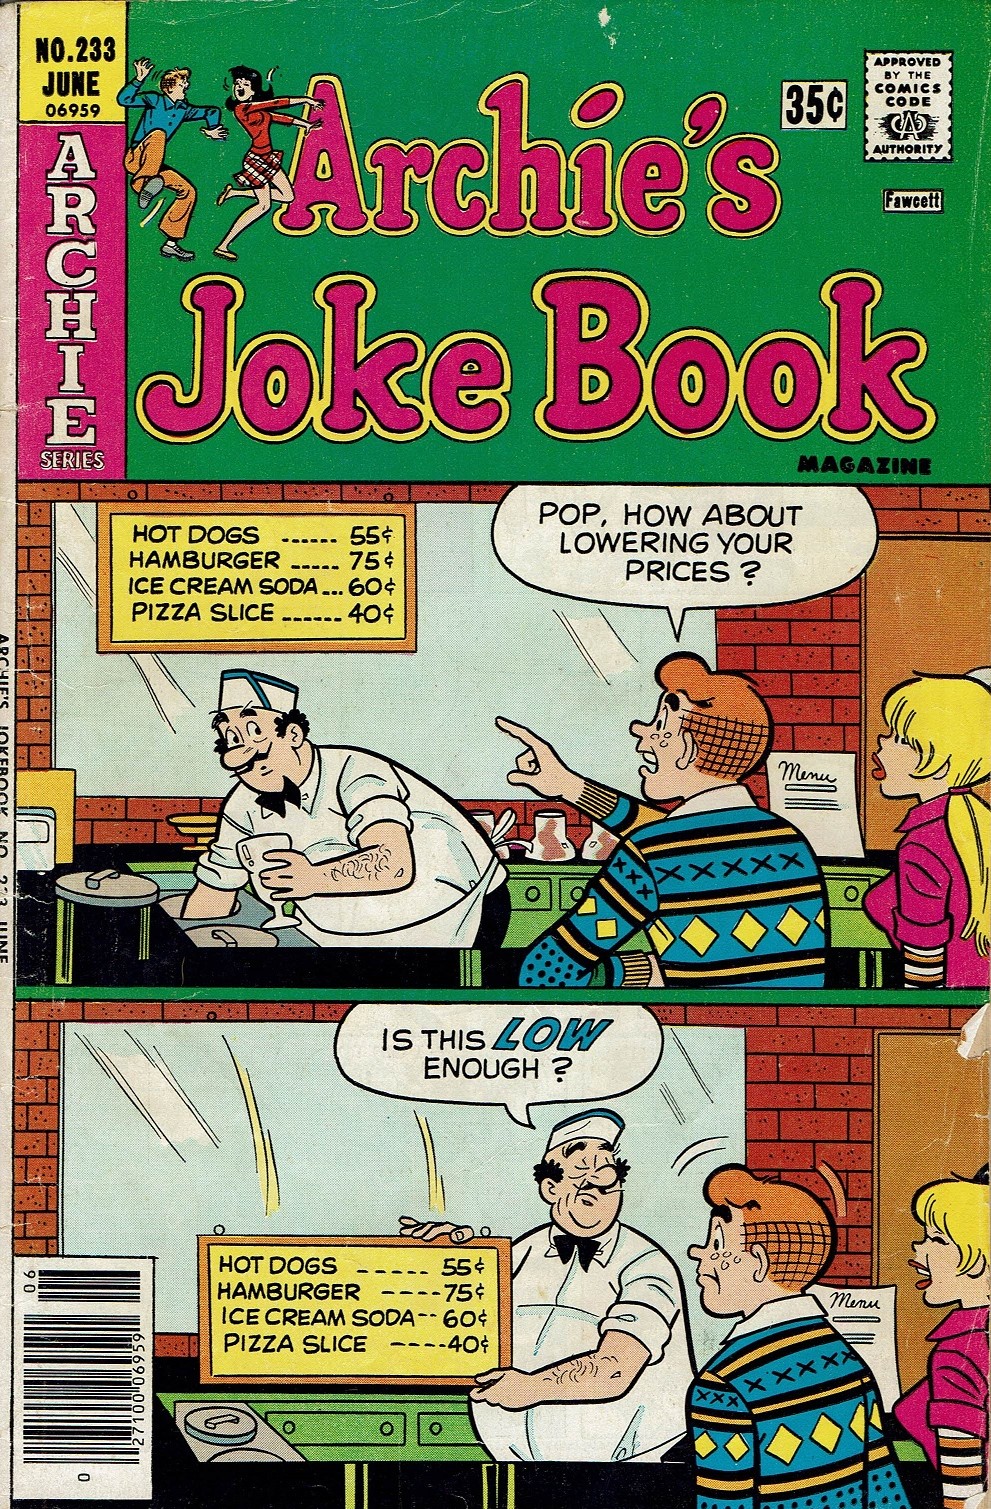 Archie's Joke Book Magazine issue 233 - Page 1